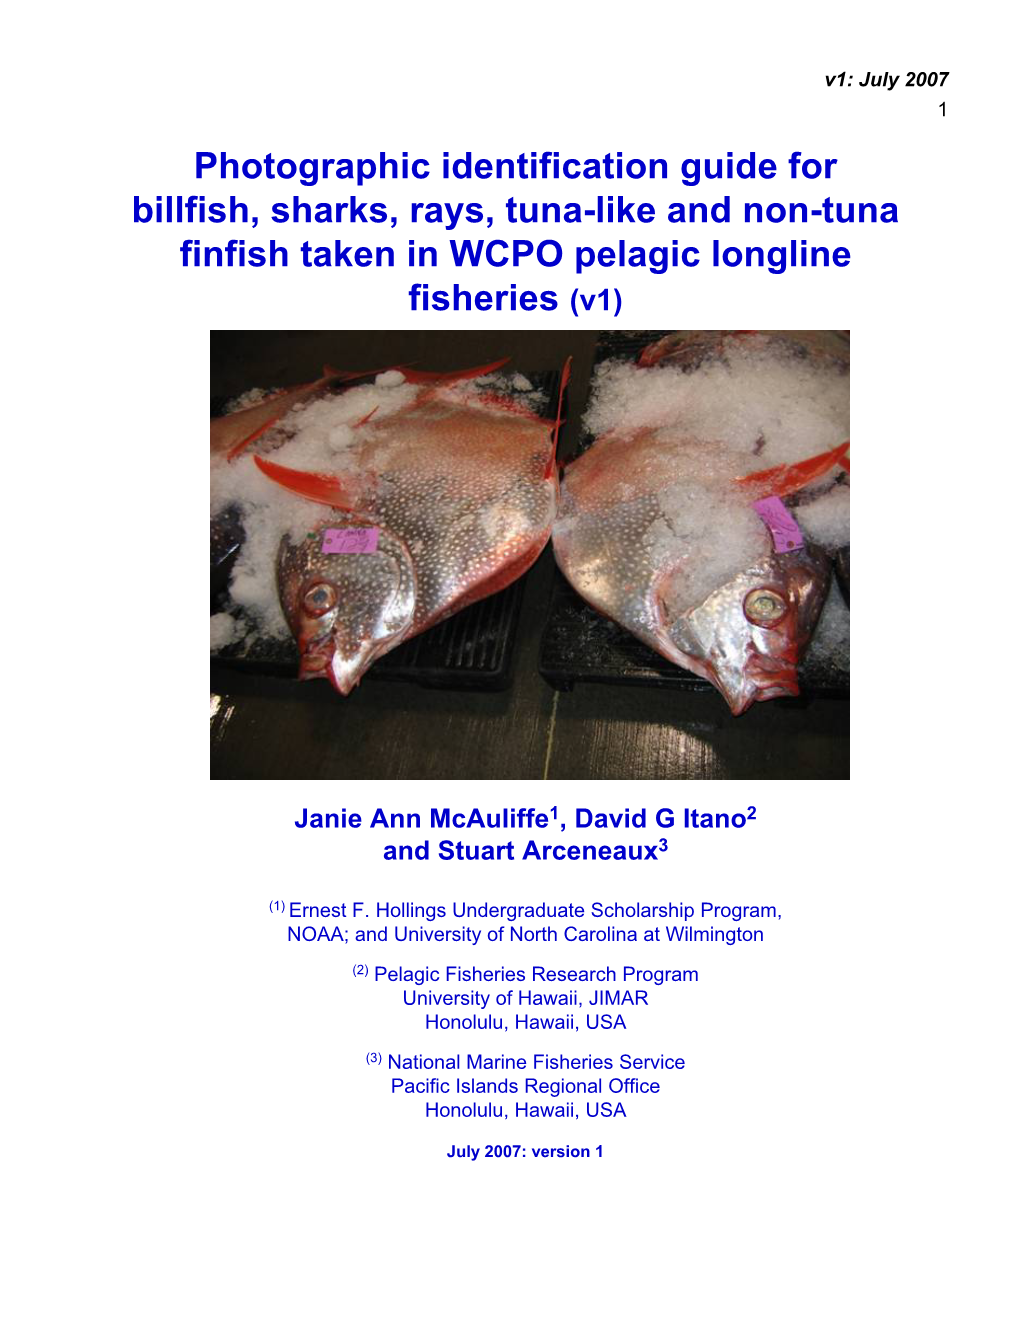 Photographic Identification Guide for Billfish, Sharks, Rays, Tuna-Like and Non-Tuna Finfish Taken in WCPO Pelagic Longline Fisheries (V1)